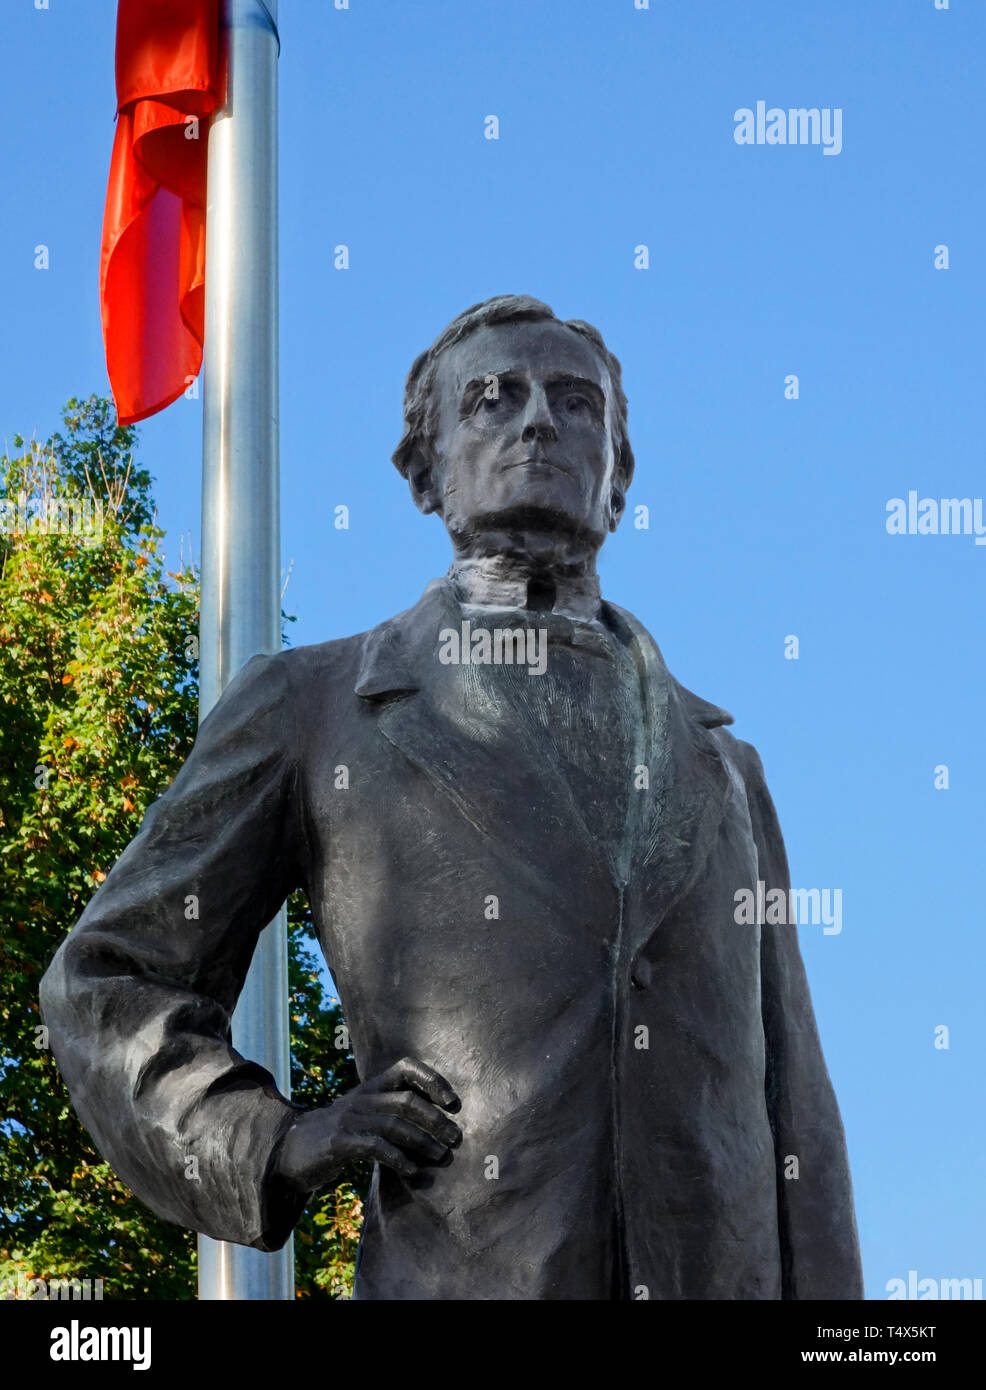 Statue of Jefferson Davis, President of the Confederacy,Richmond, Virginia, US, 2017. Stock Photo